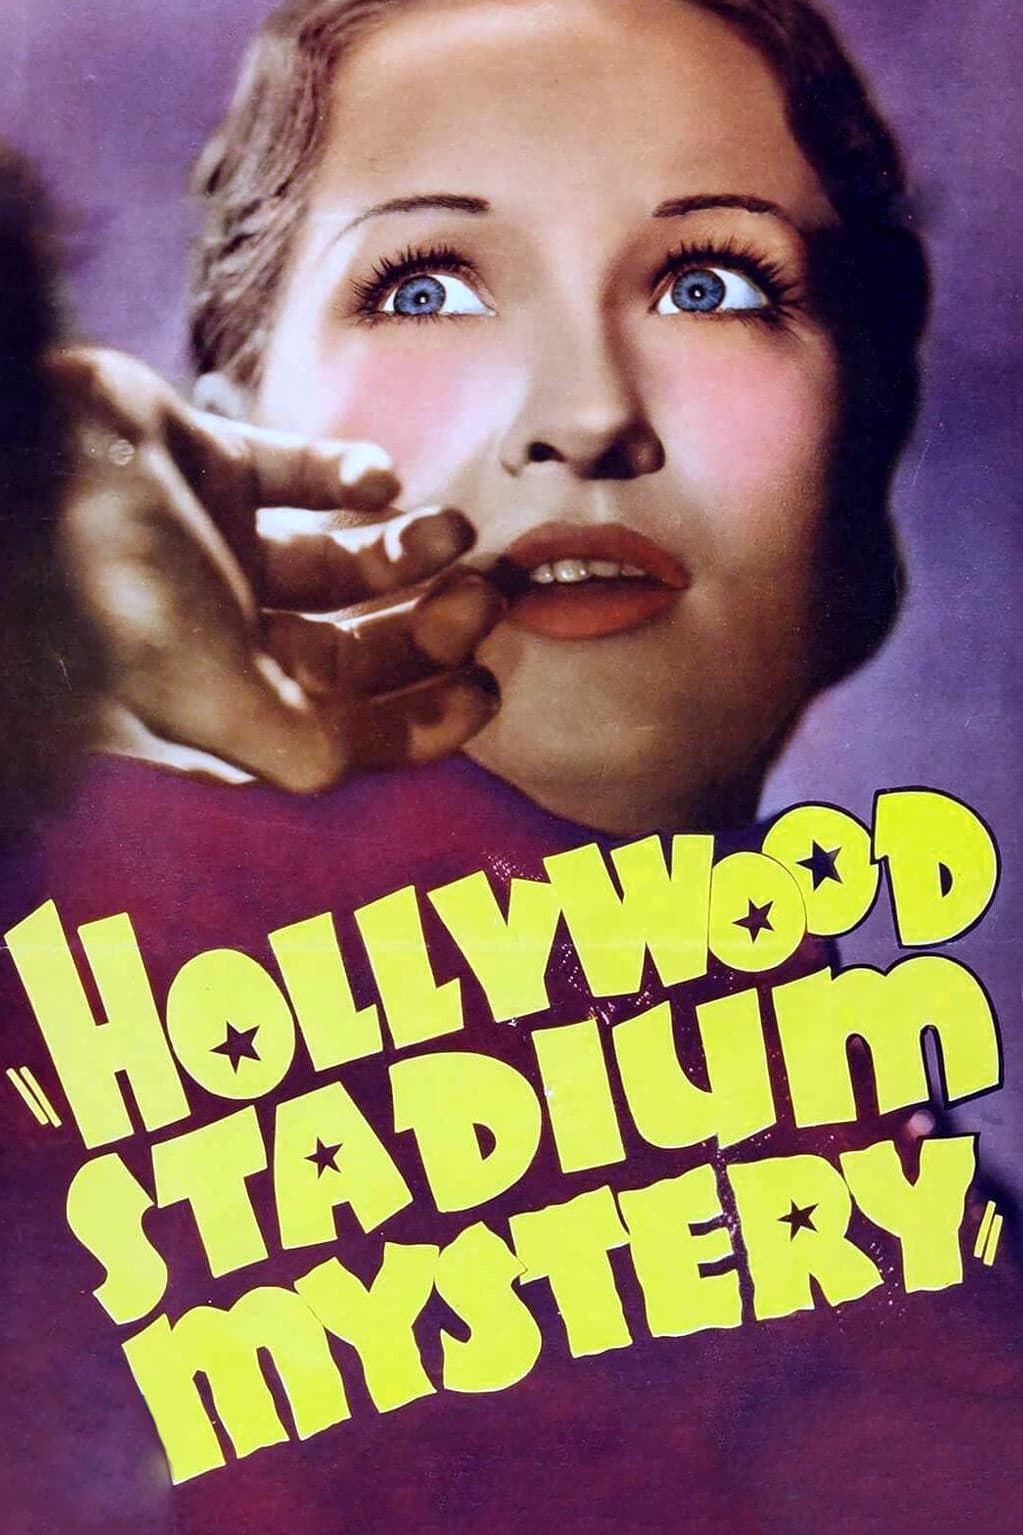 Hollywood Stadium Mystery